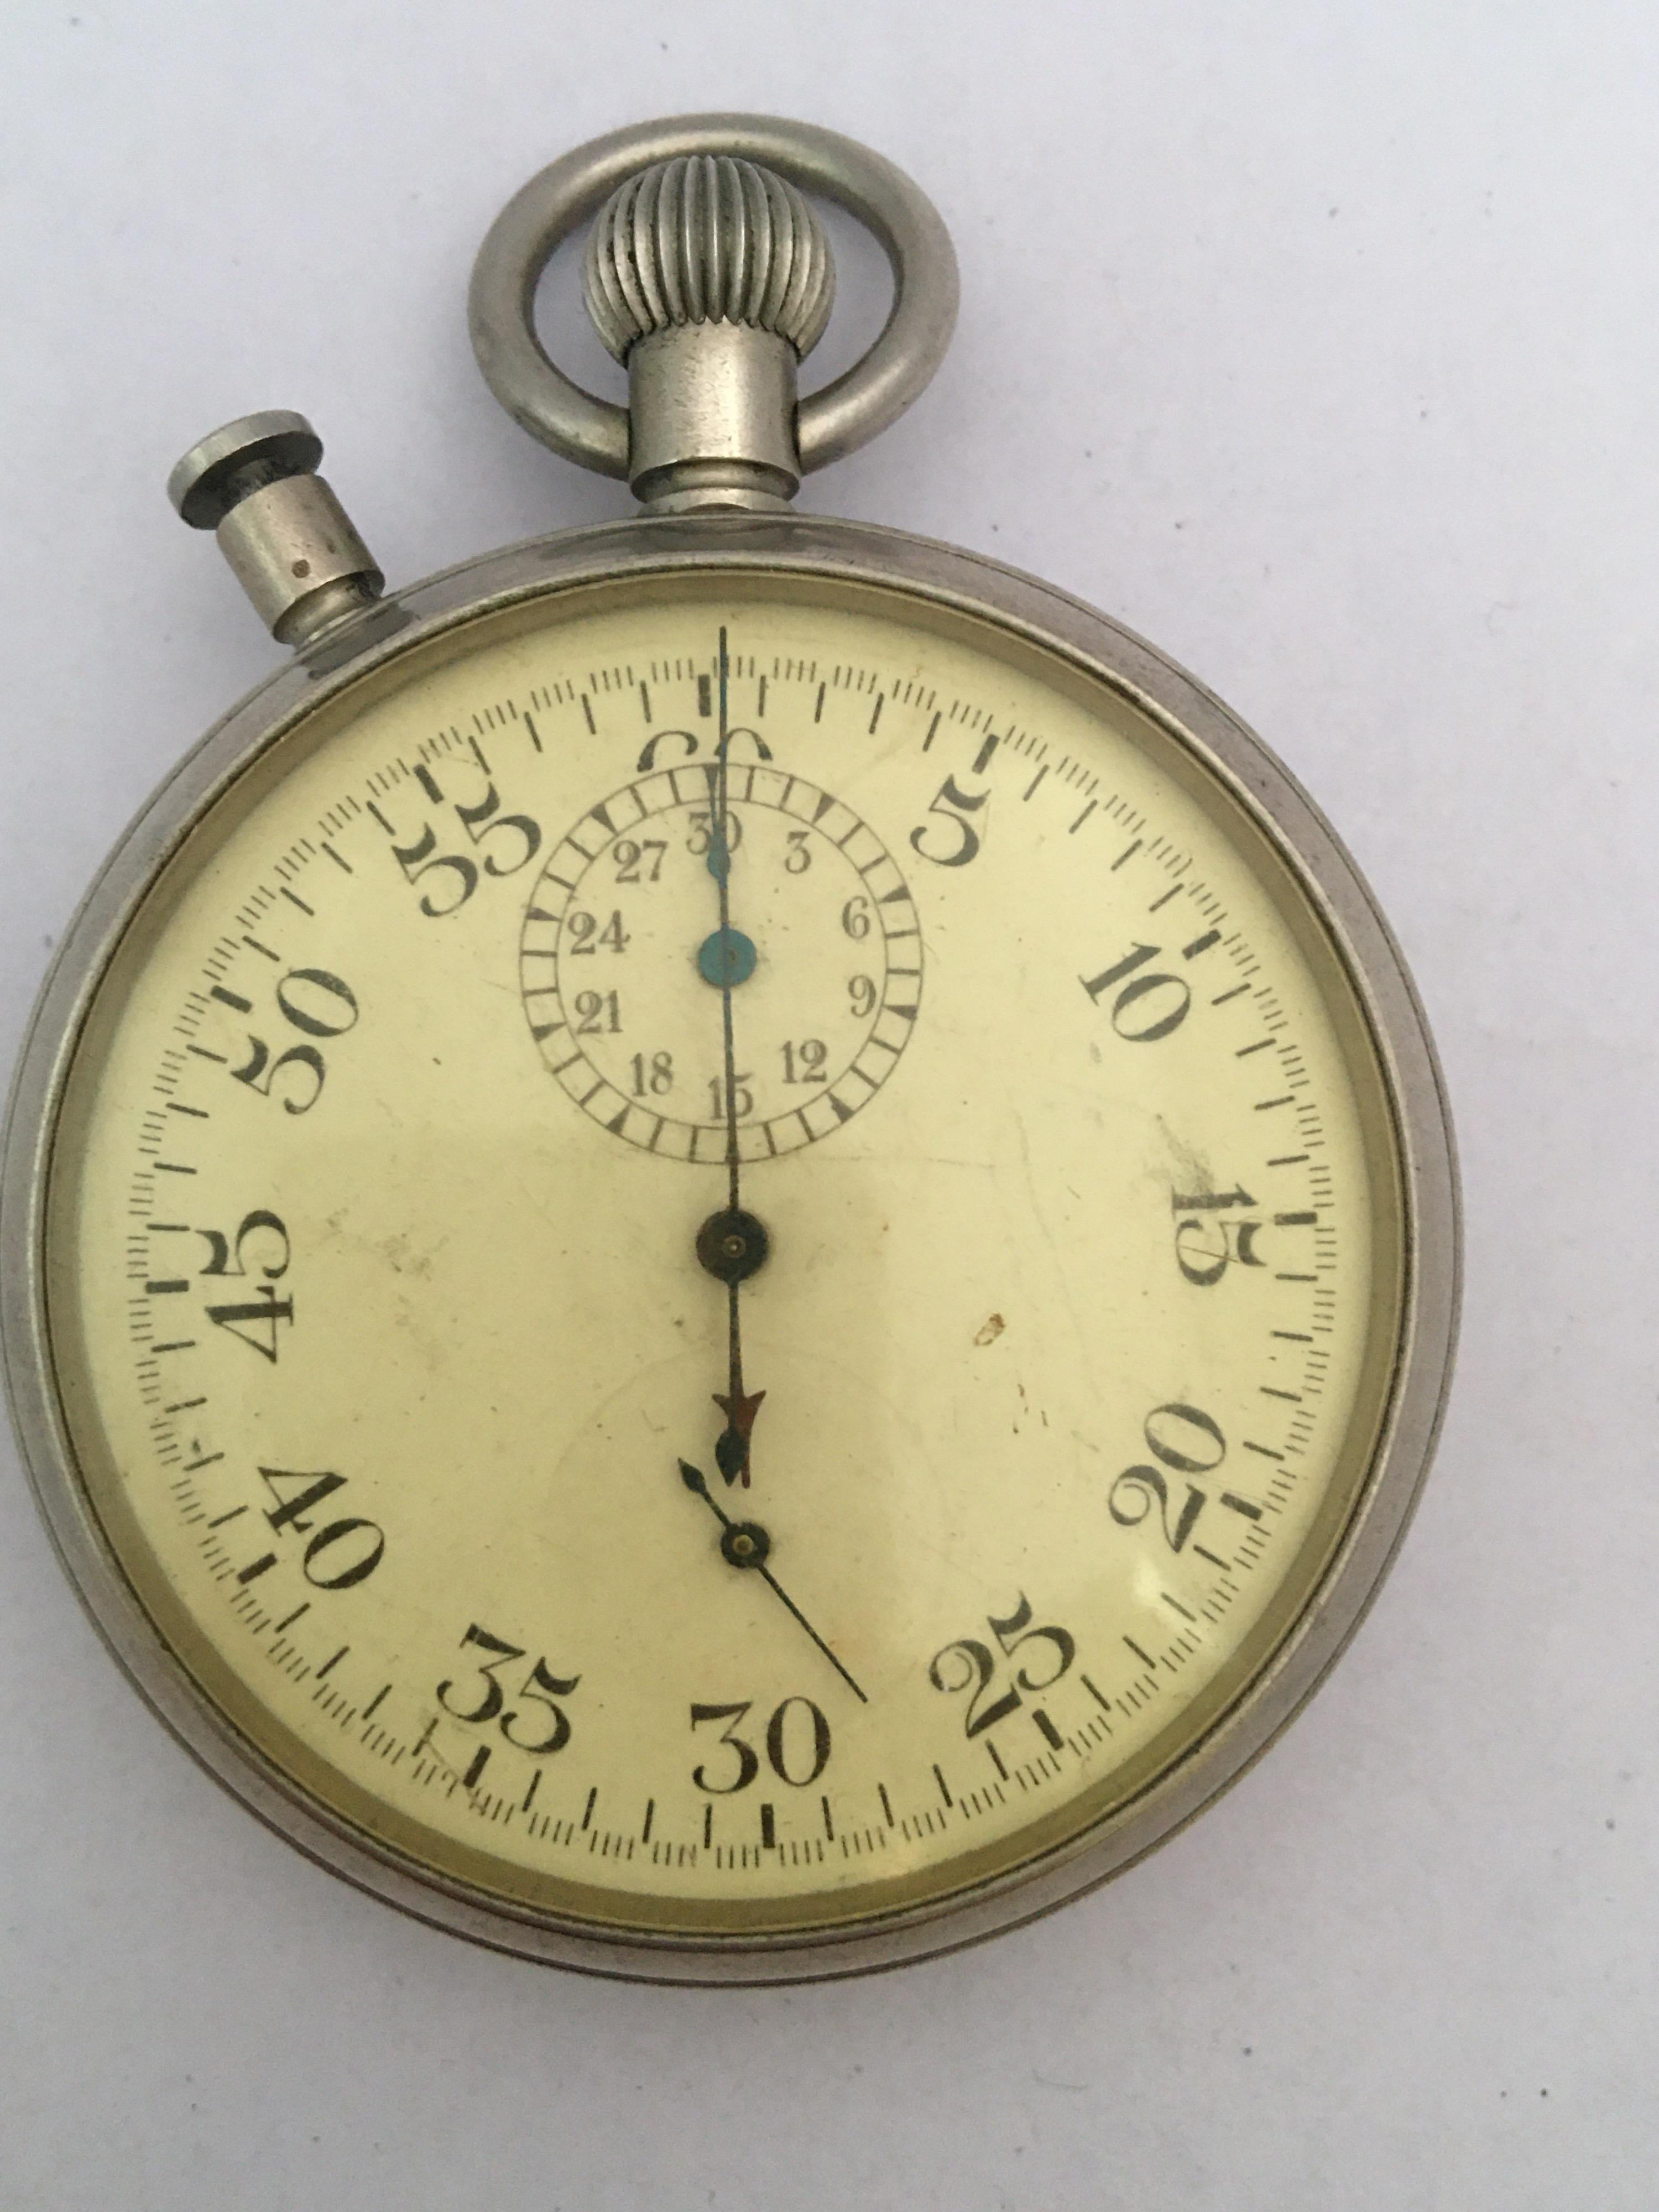 Rare 1940s Military Chronograph Stopwatch with Split-Seconds PATT. 4 No. 11643 2